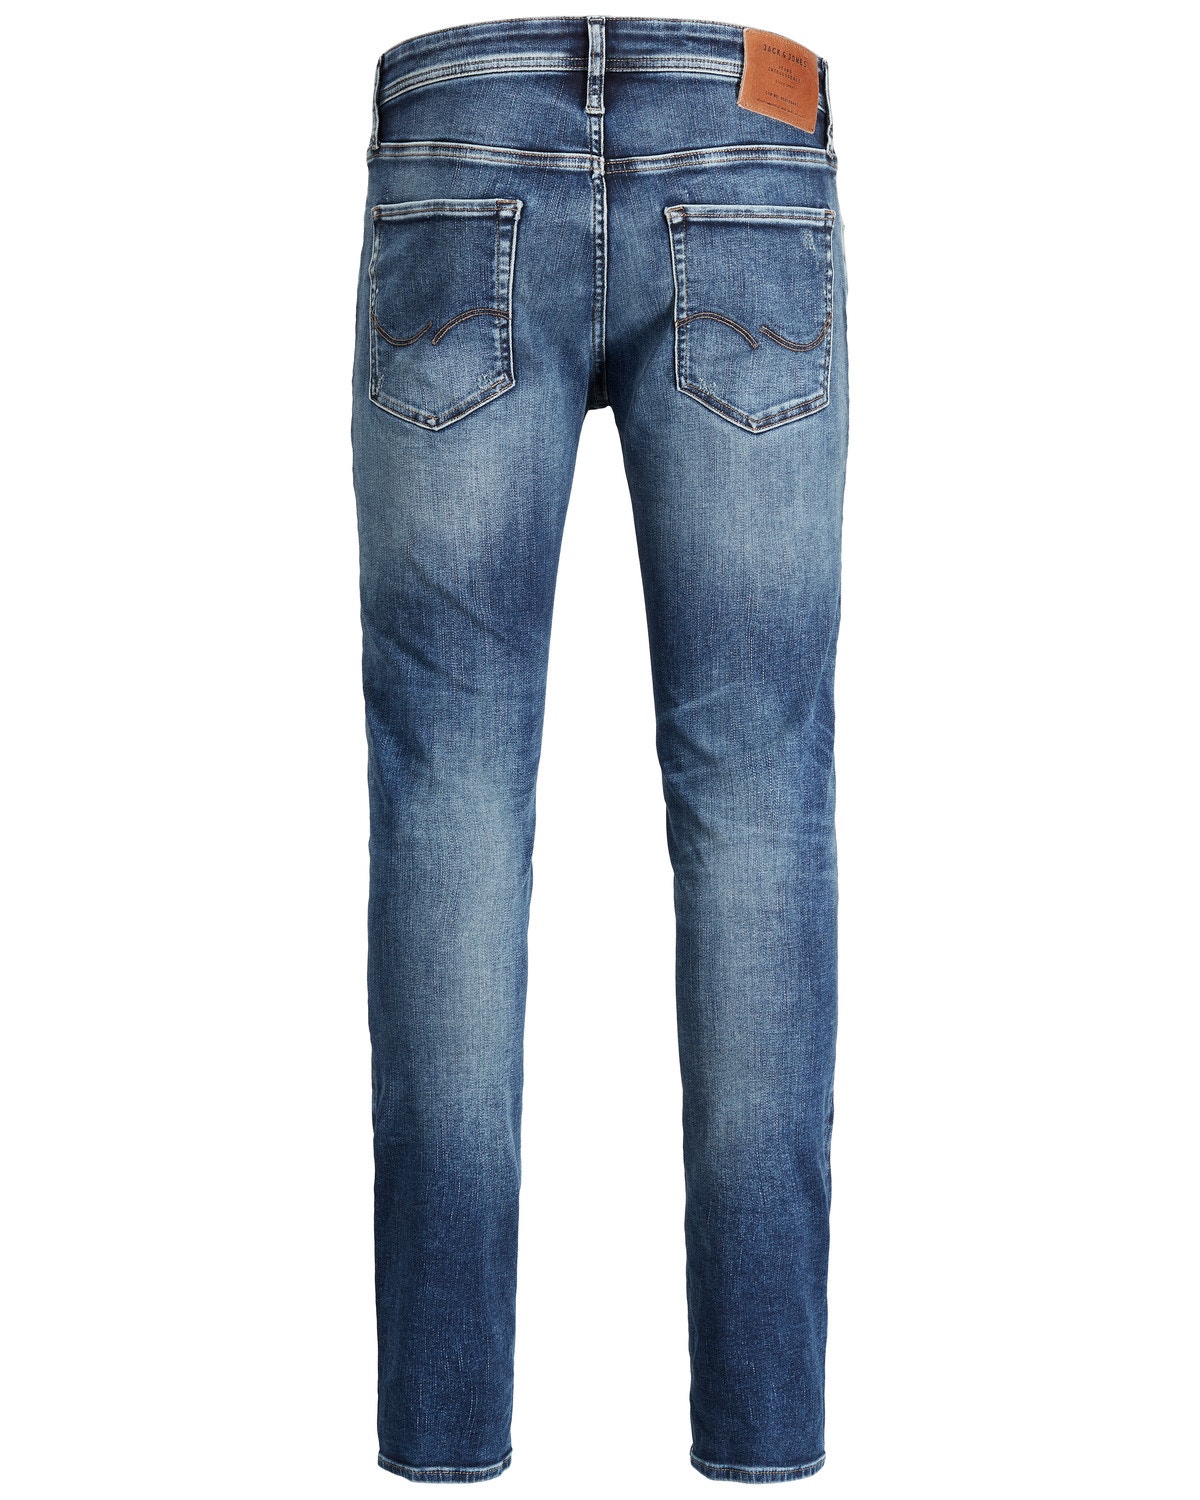 JJIWHGLENN JJORIGINAL JOS 207 50SPS Slim fit jeans with 40% discount ...